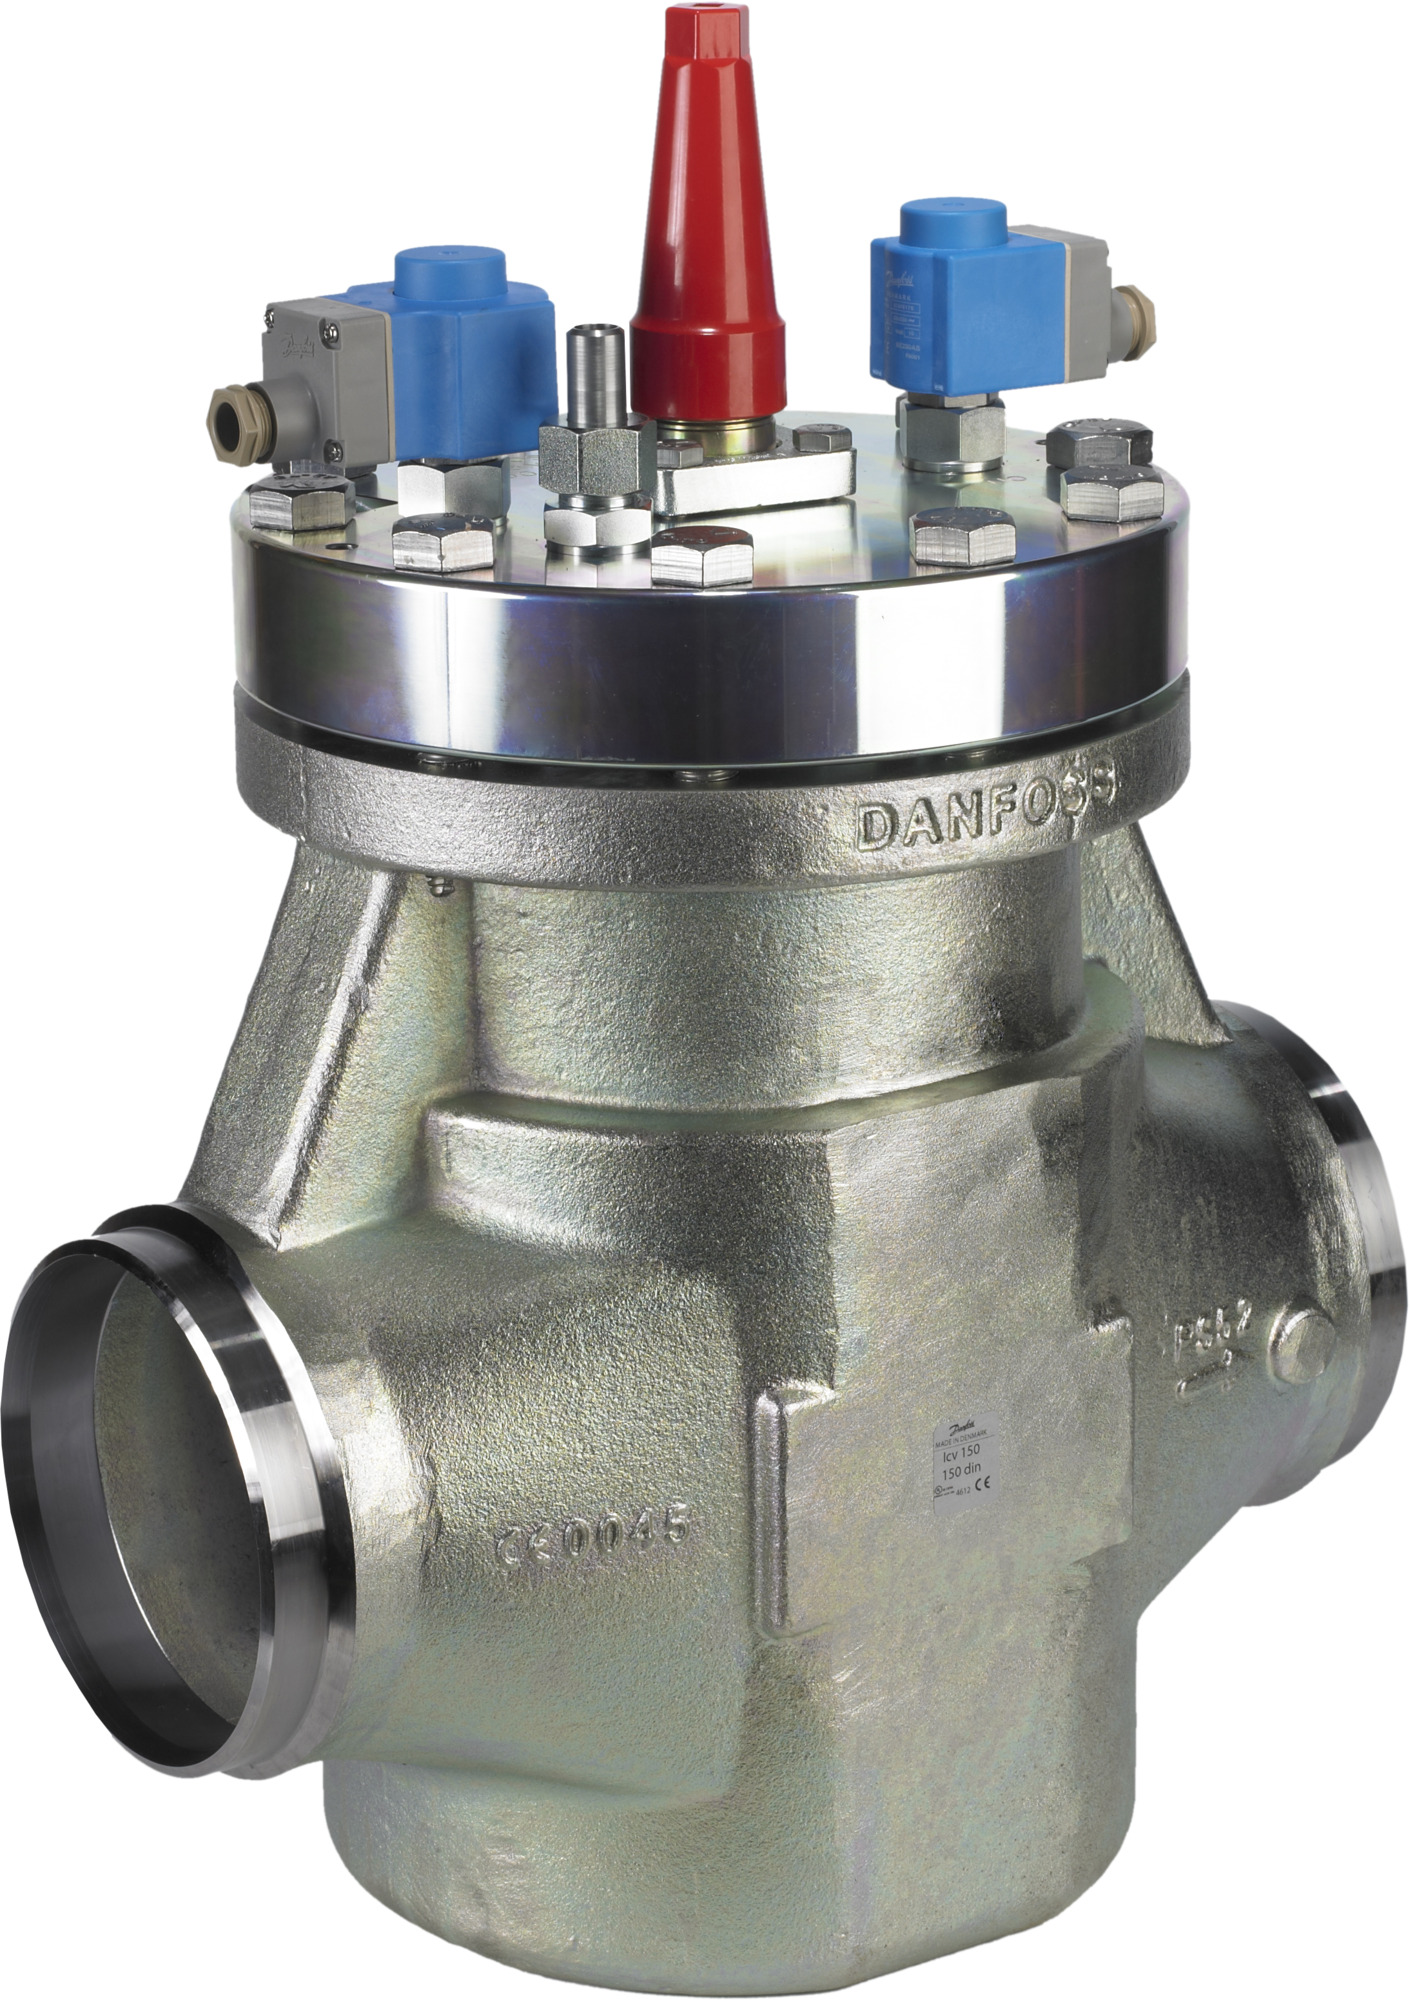 2-step solenoid valve, ICLX 150, 150.0 mm, Butt weld